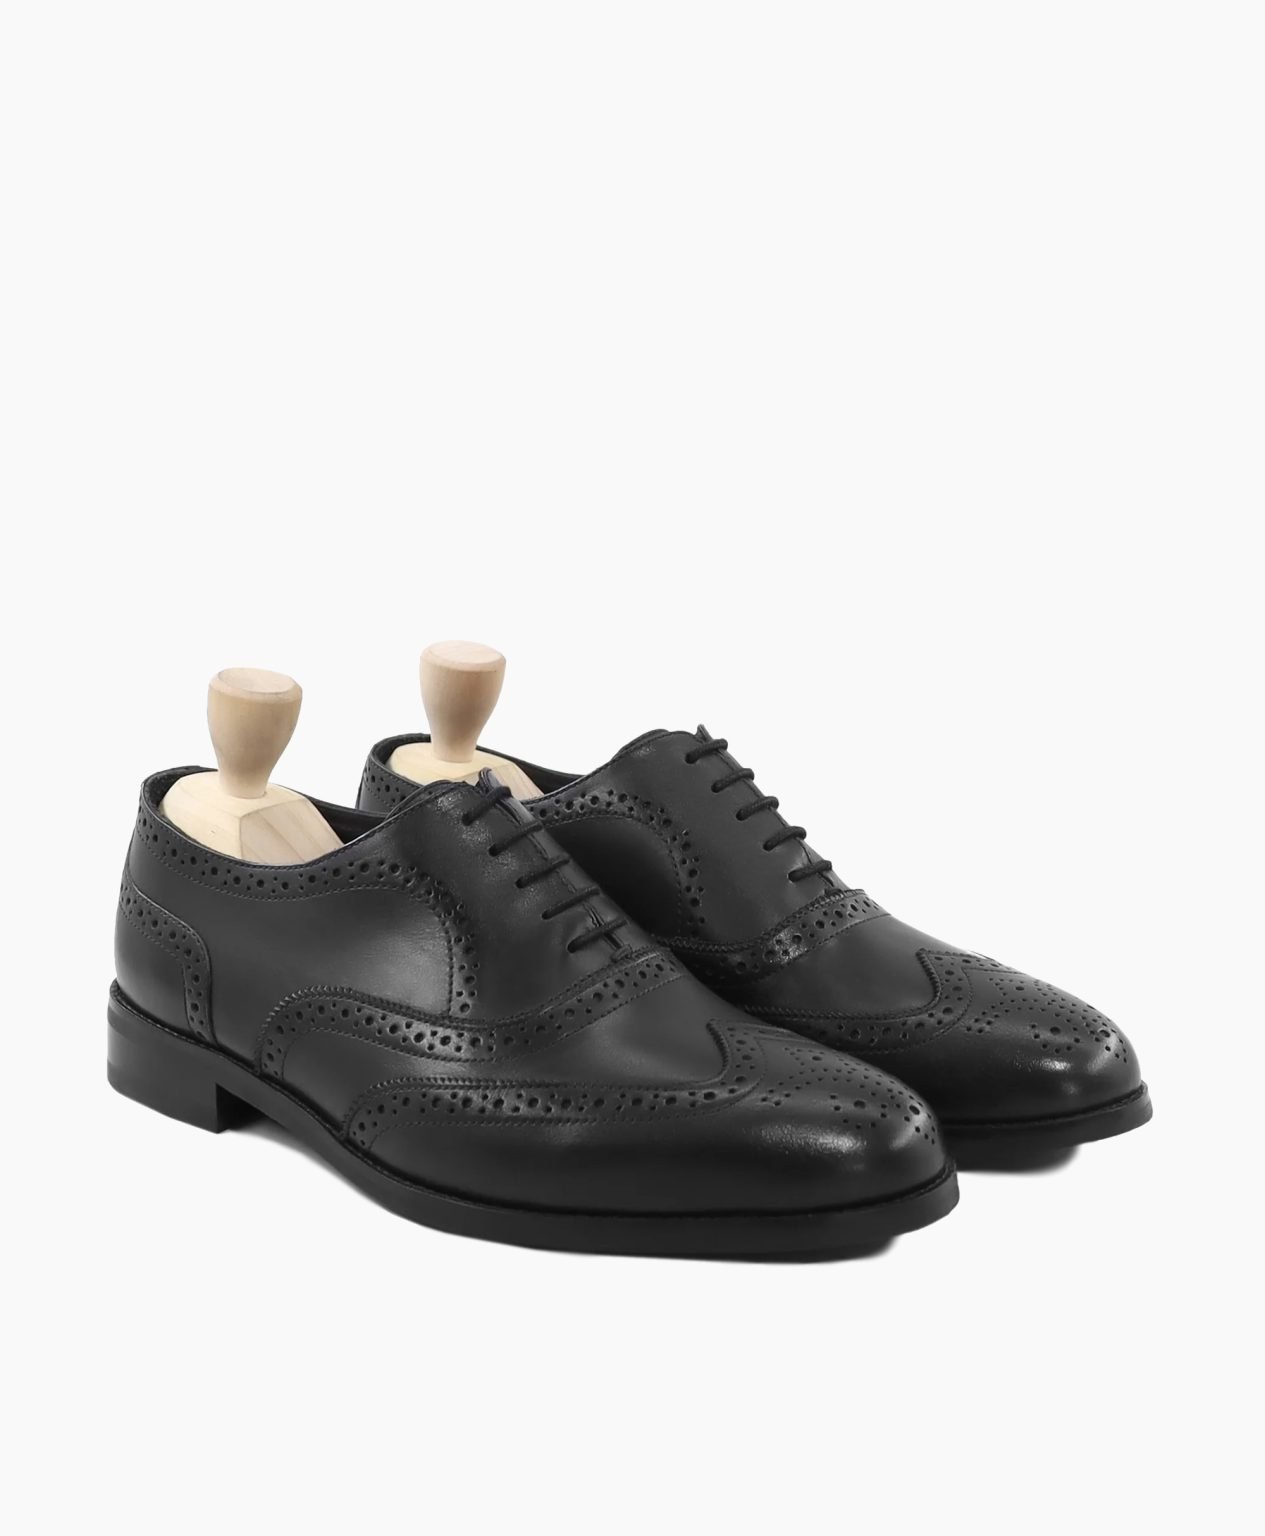 huntingdon-oxford-black-leather-shoes-image200